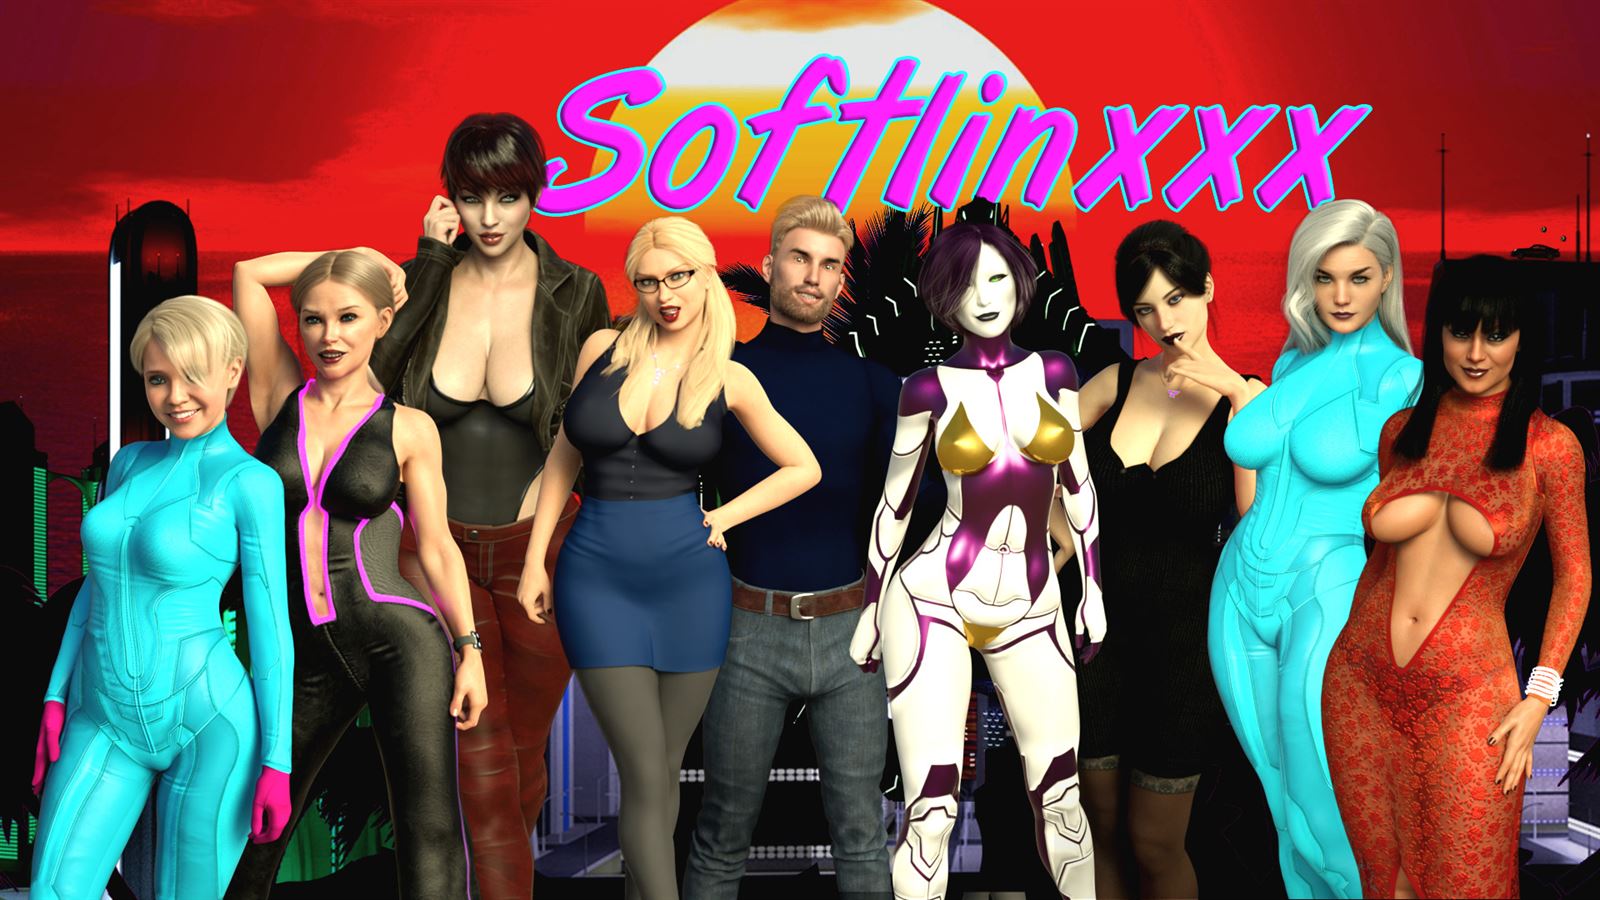 Softlinxxx porn xxx game download cover